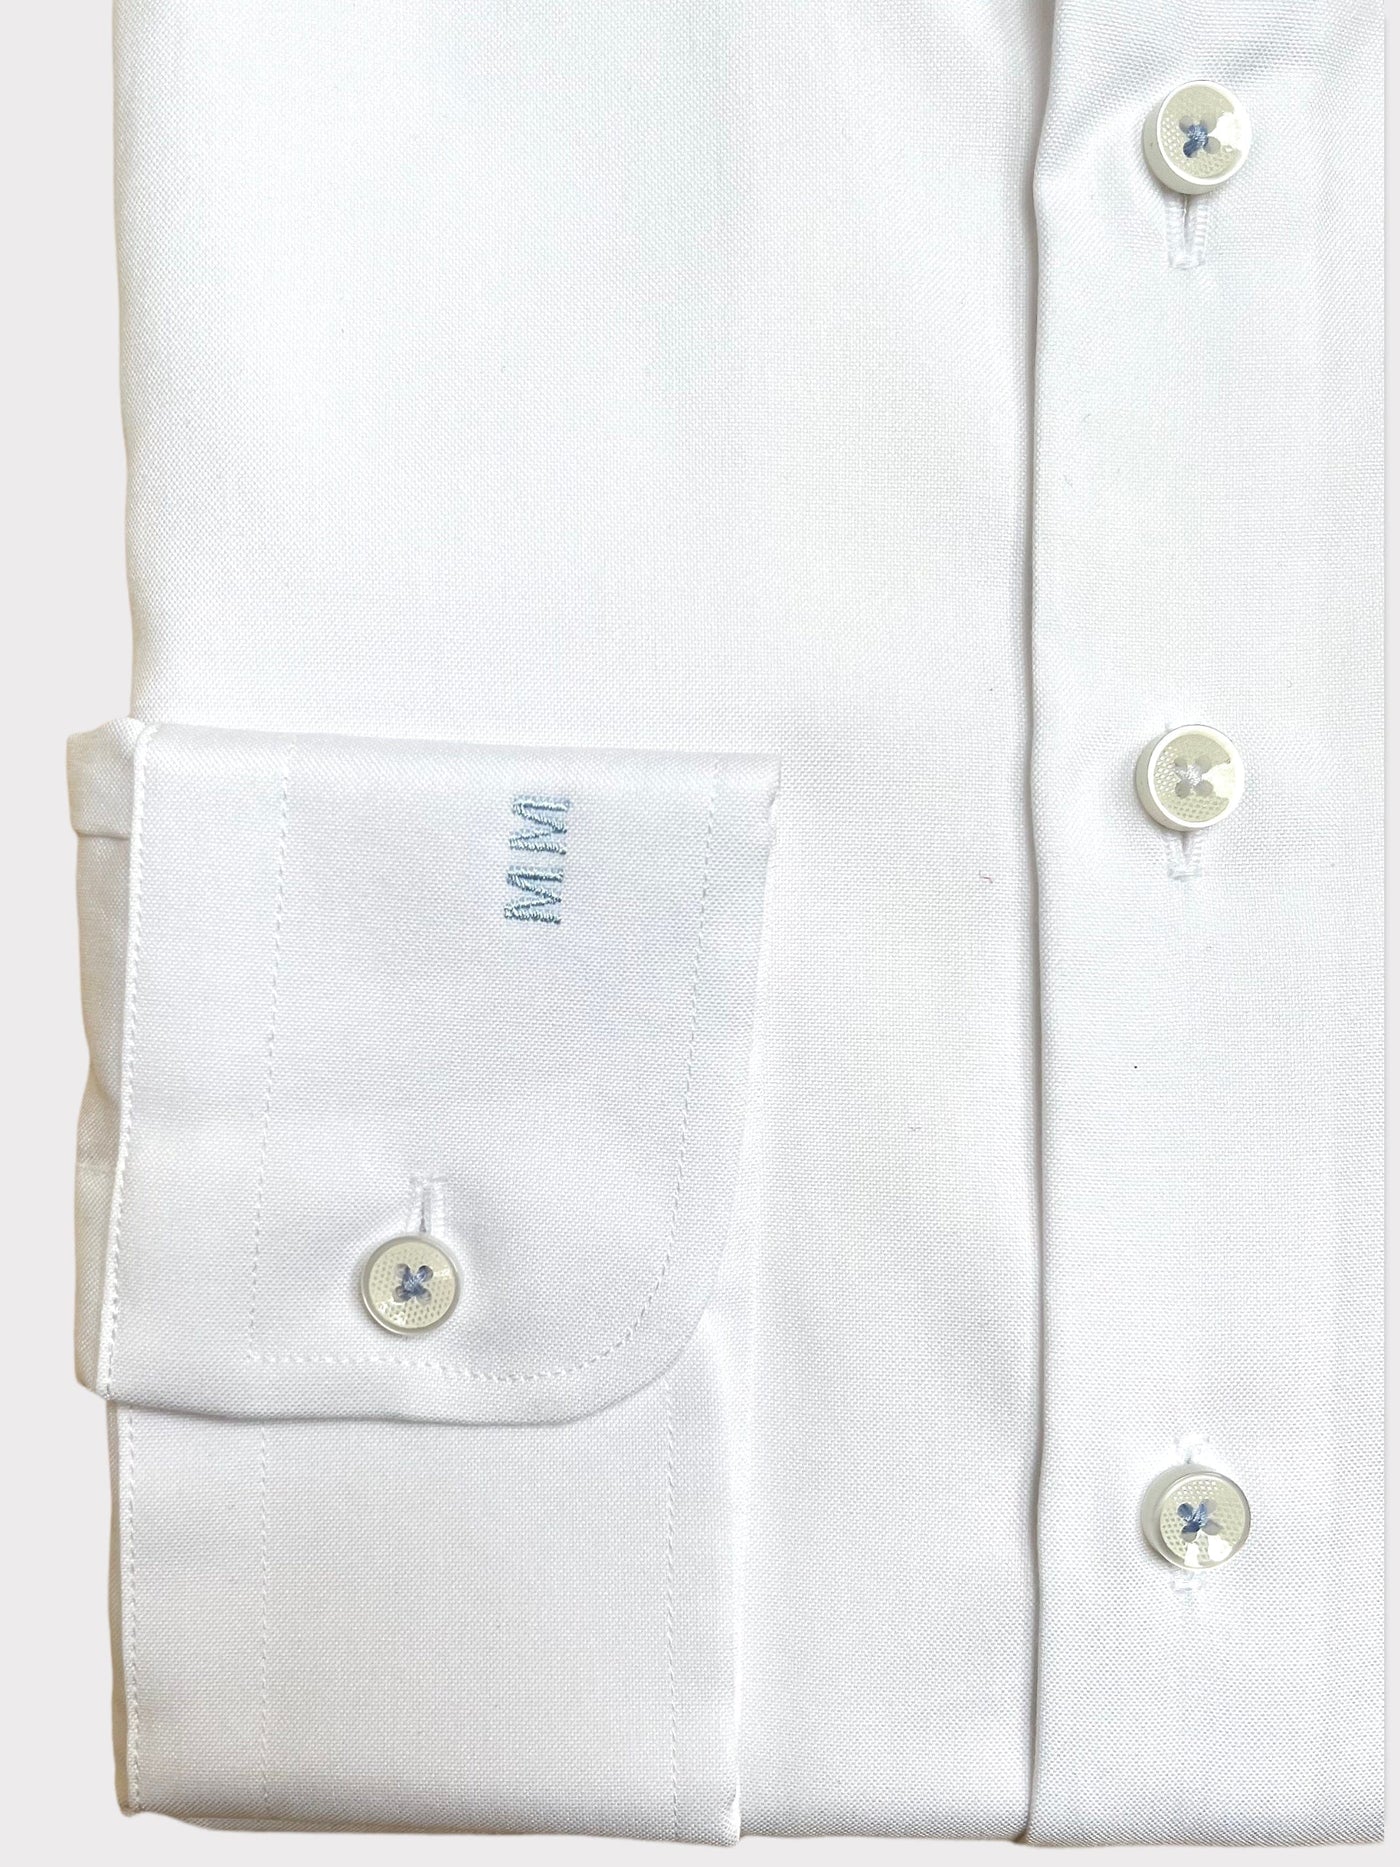 White Pinpoint Shirt